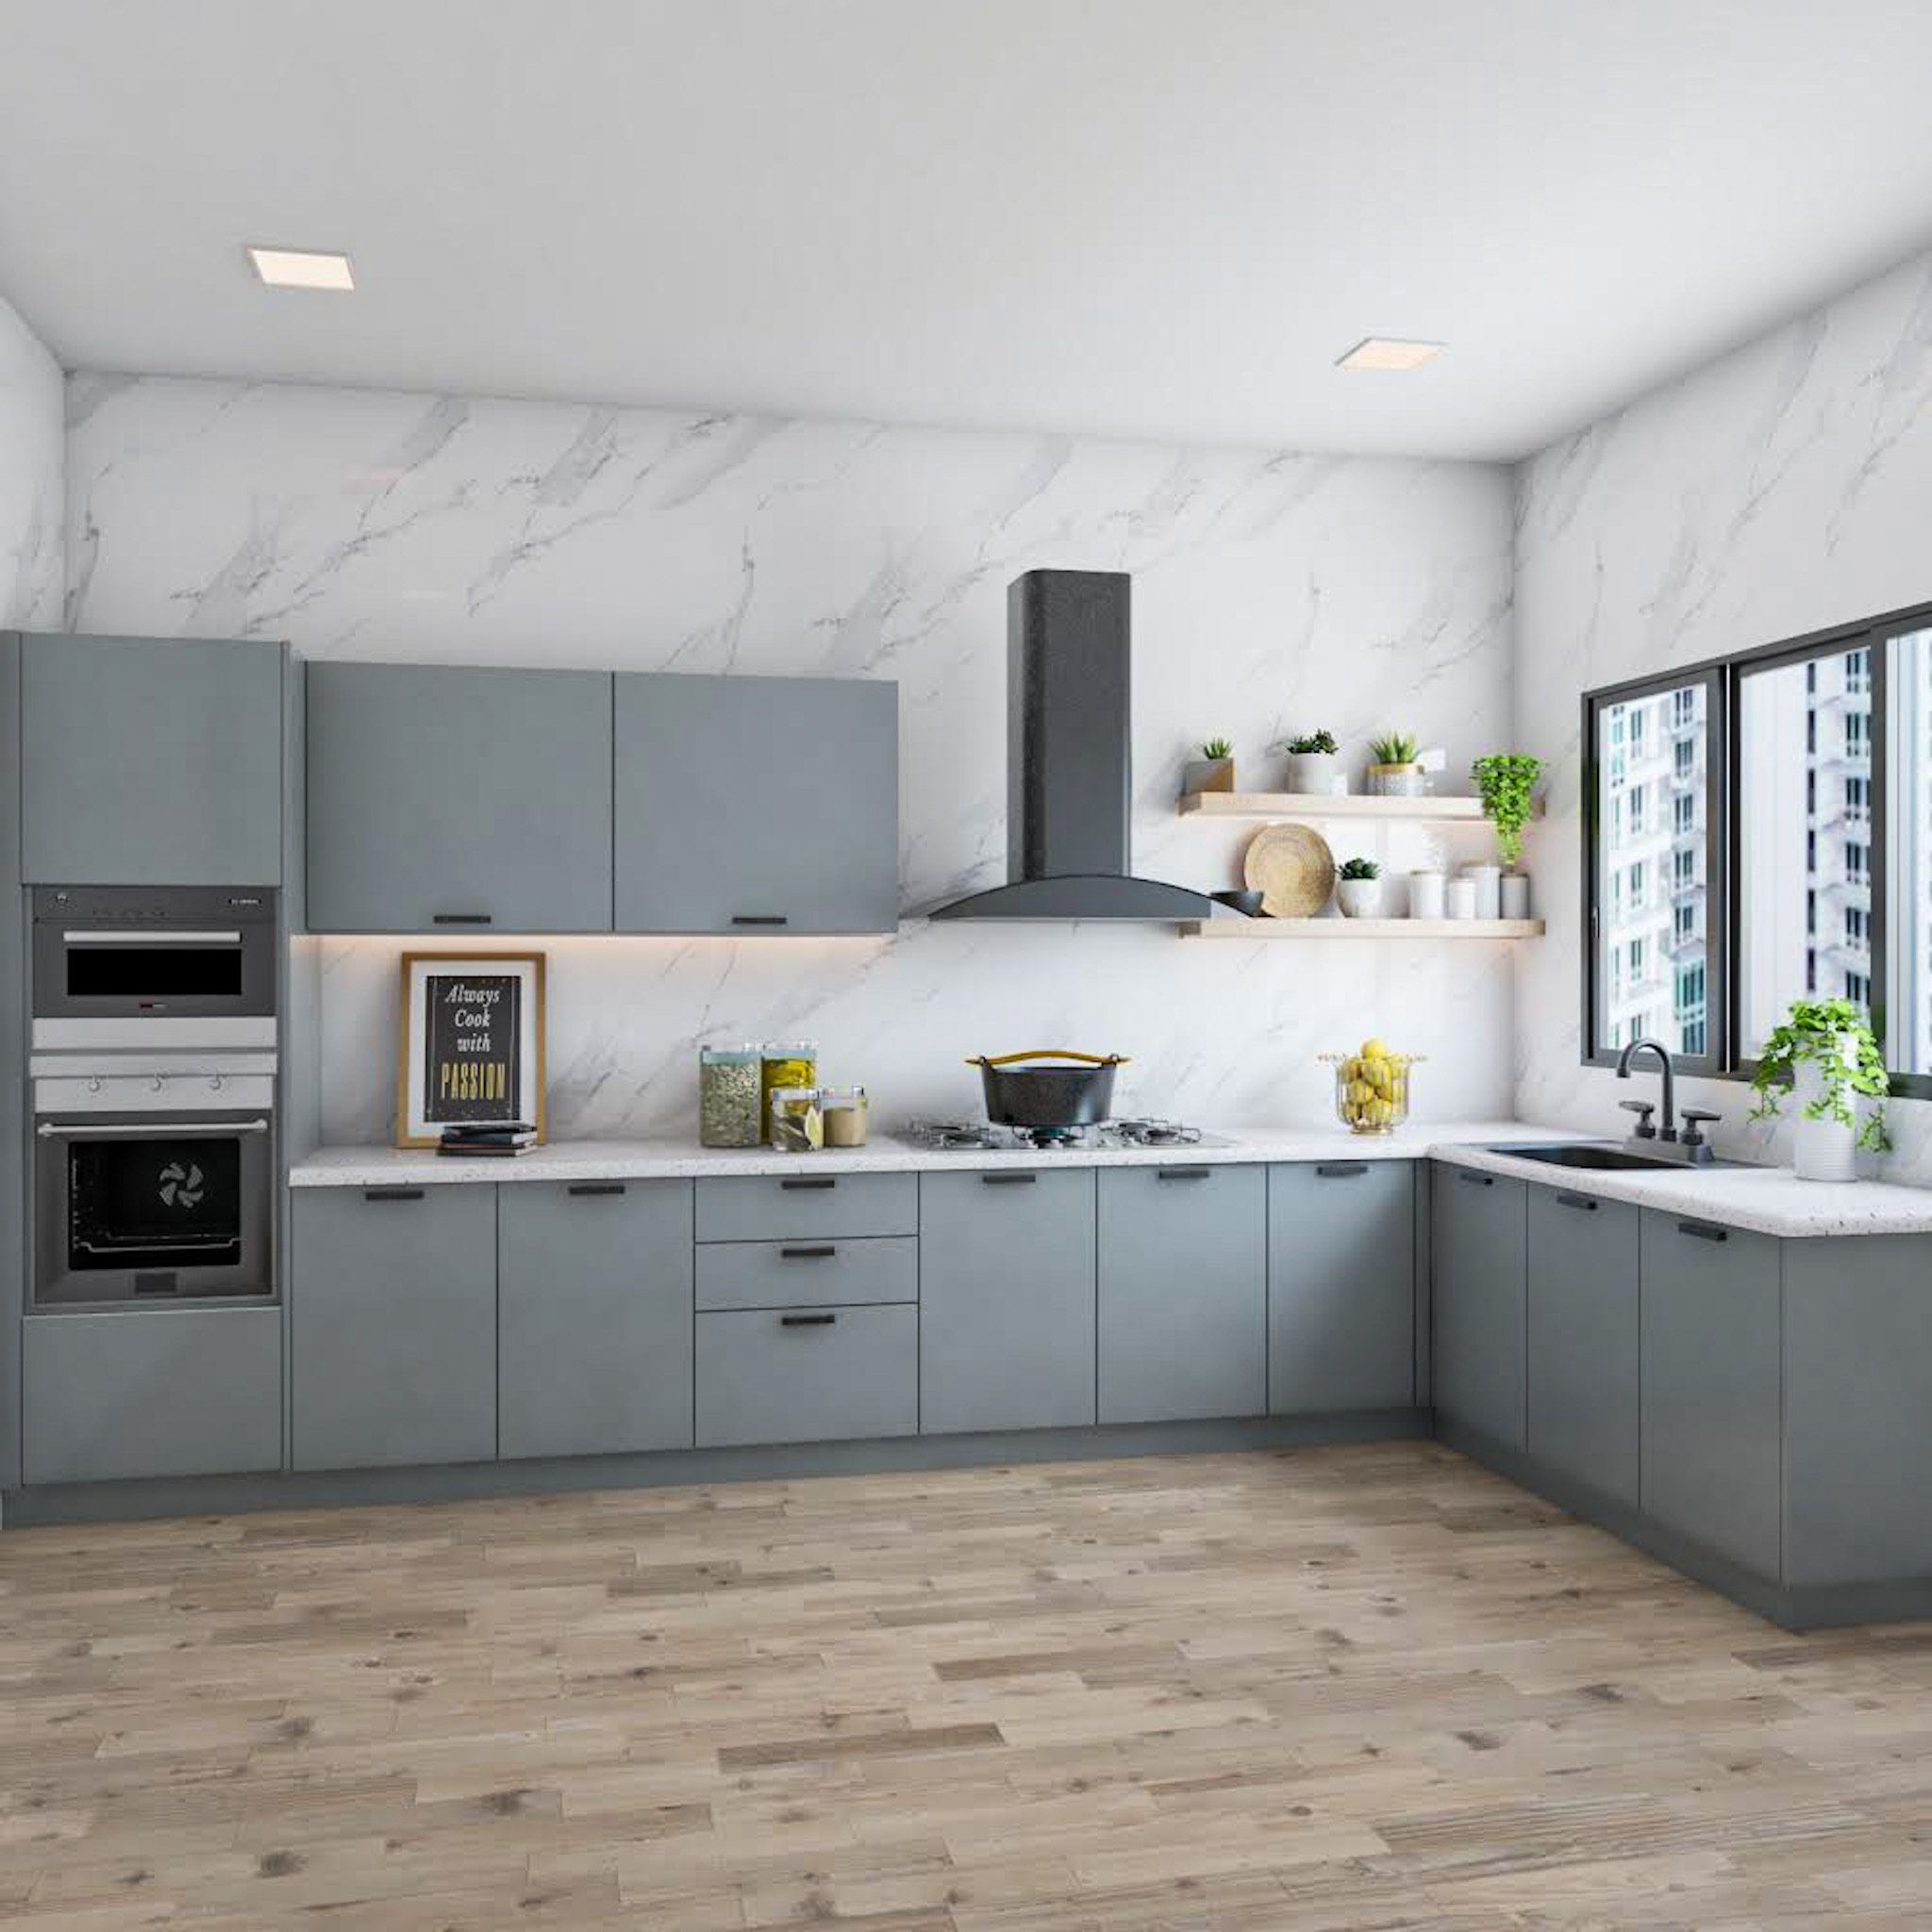 Blue L-Shaped Kitchen Cabinet Design With White Backsplash | Livspace